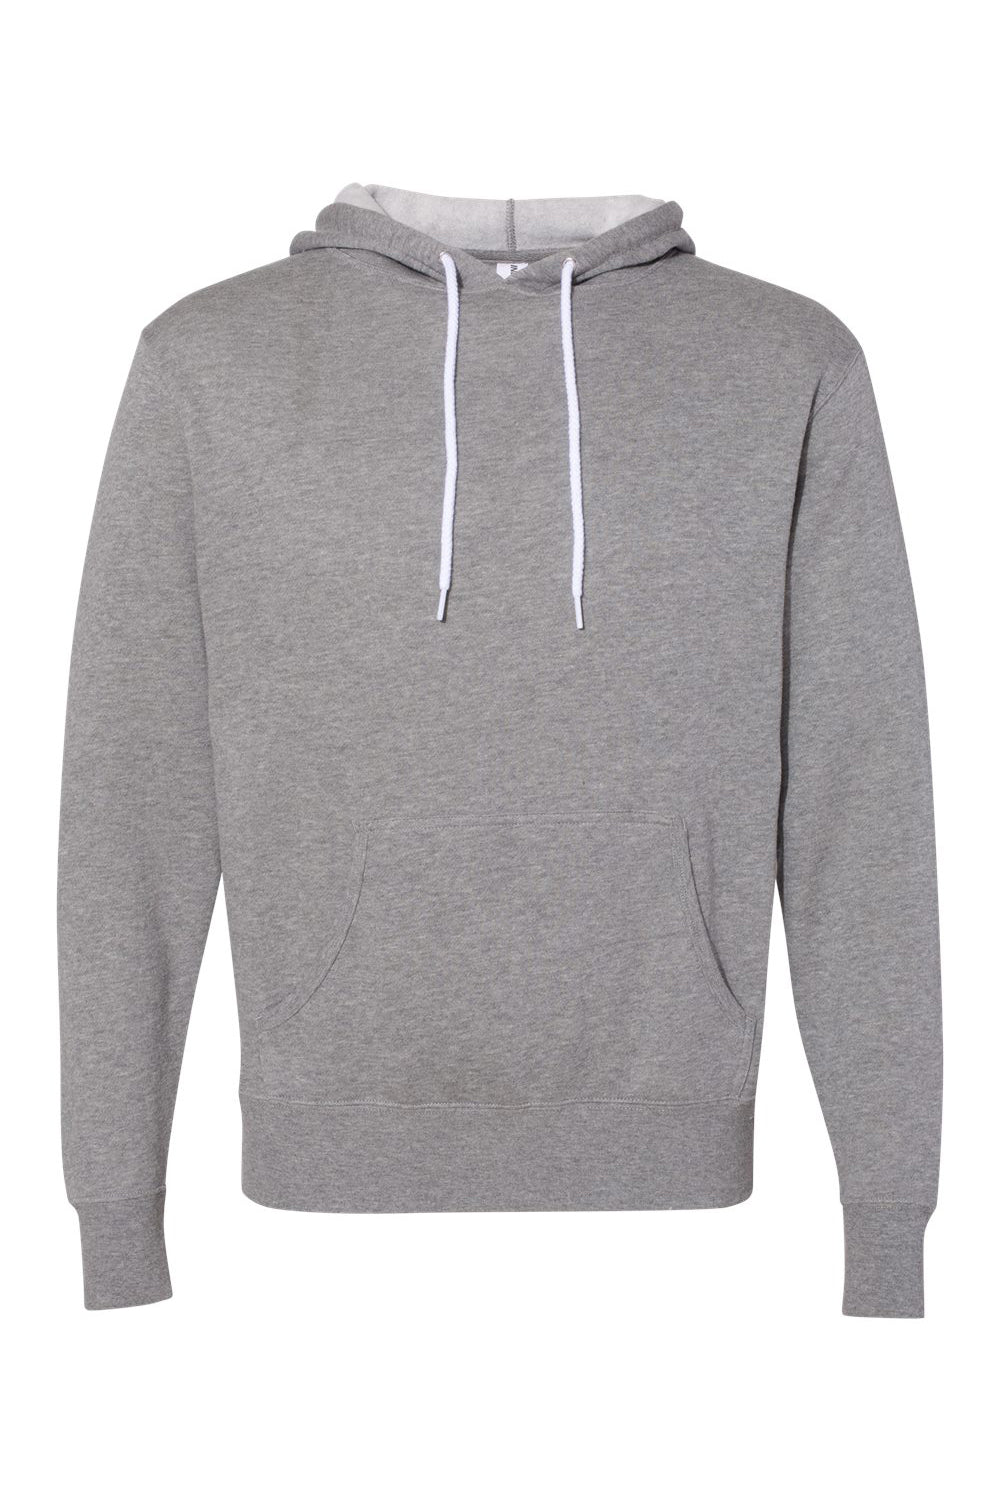 Independent Trading Co. AFX90UN Mens Hooded Sweatshirt Hoodie Heather Gunmetal Grey Flat Front